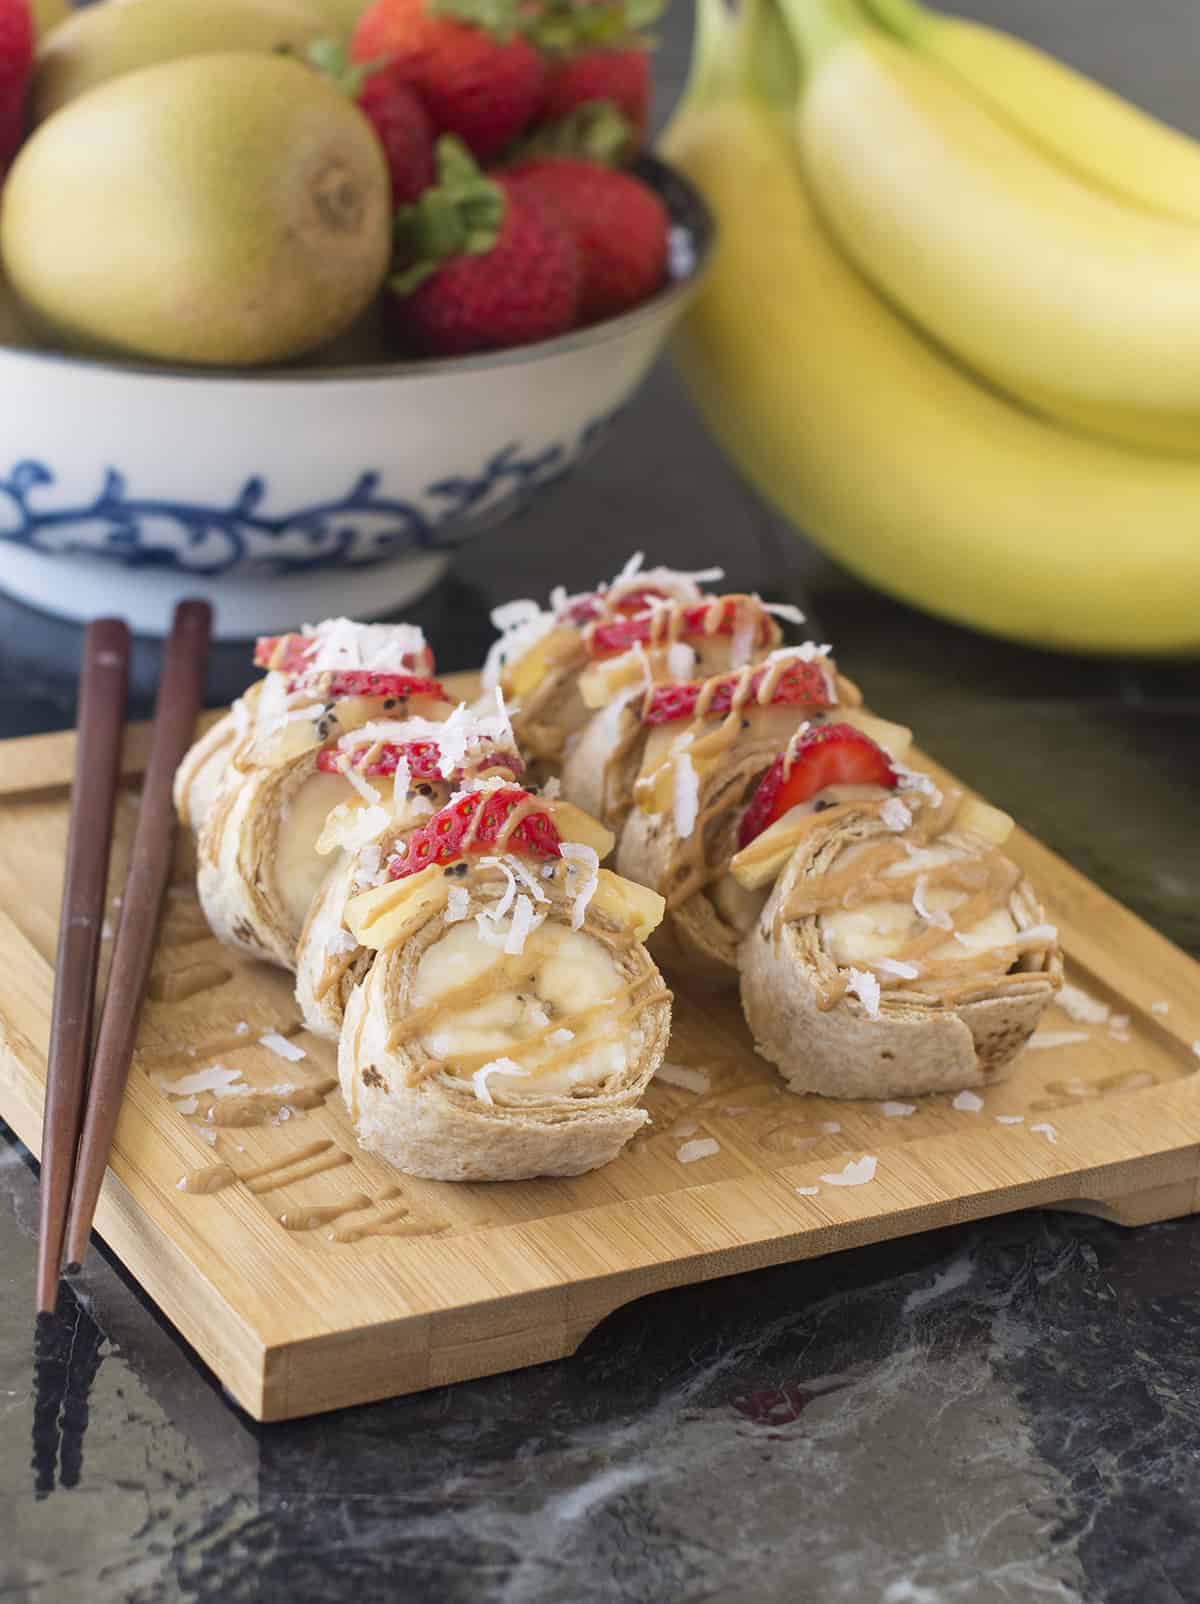 Banana sushi rolls